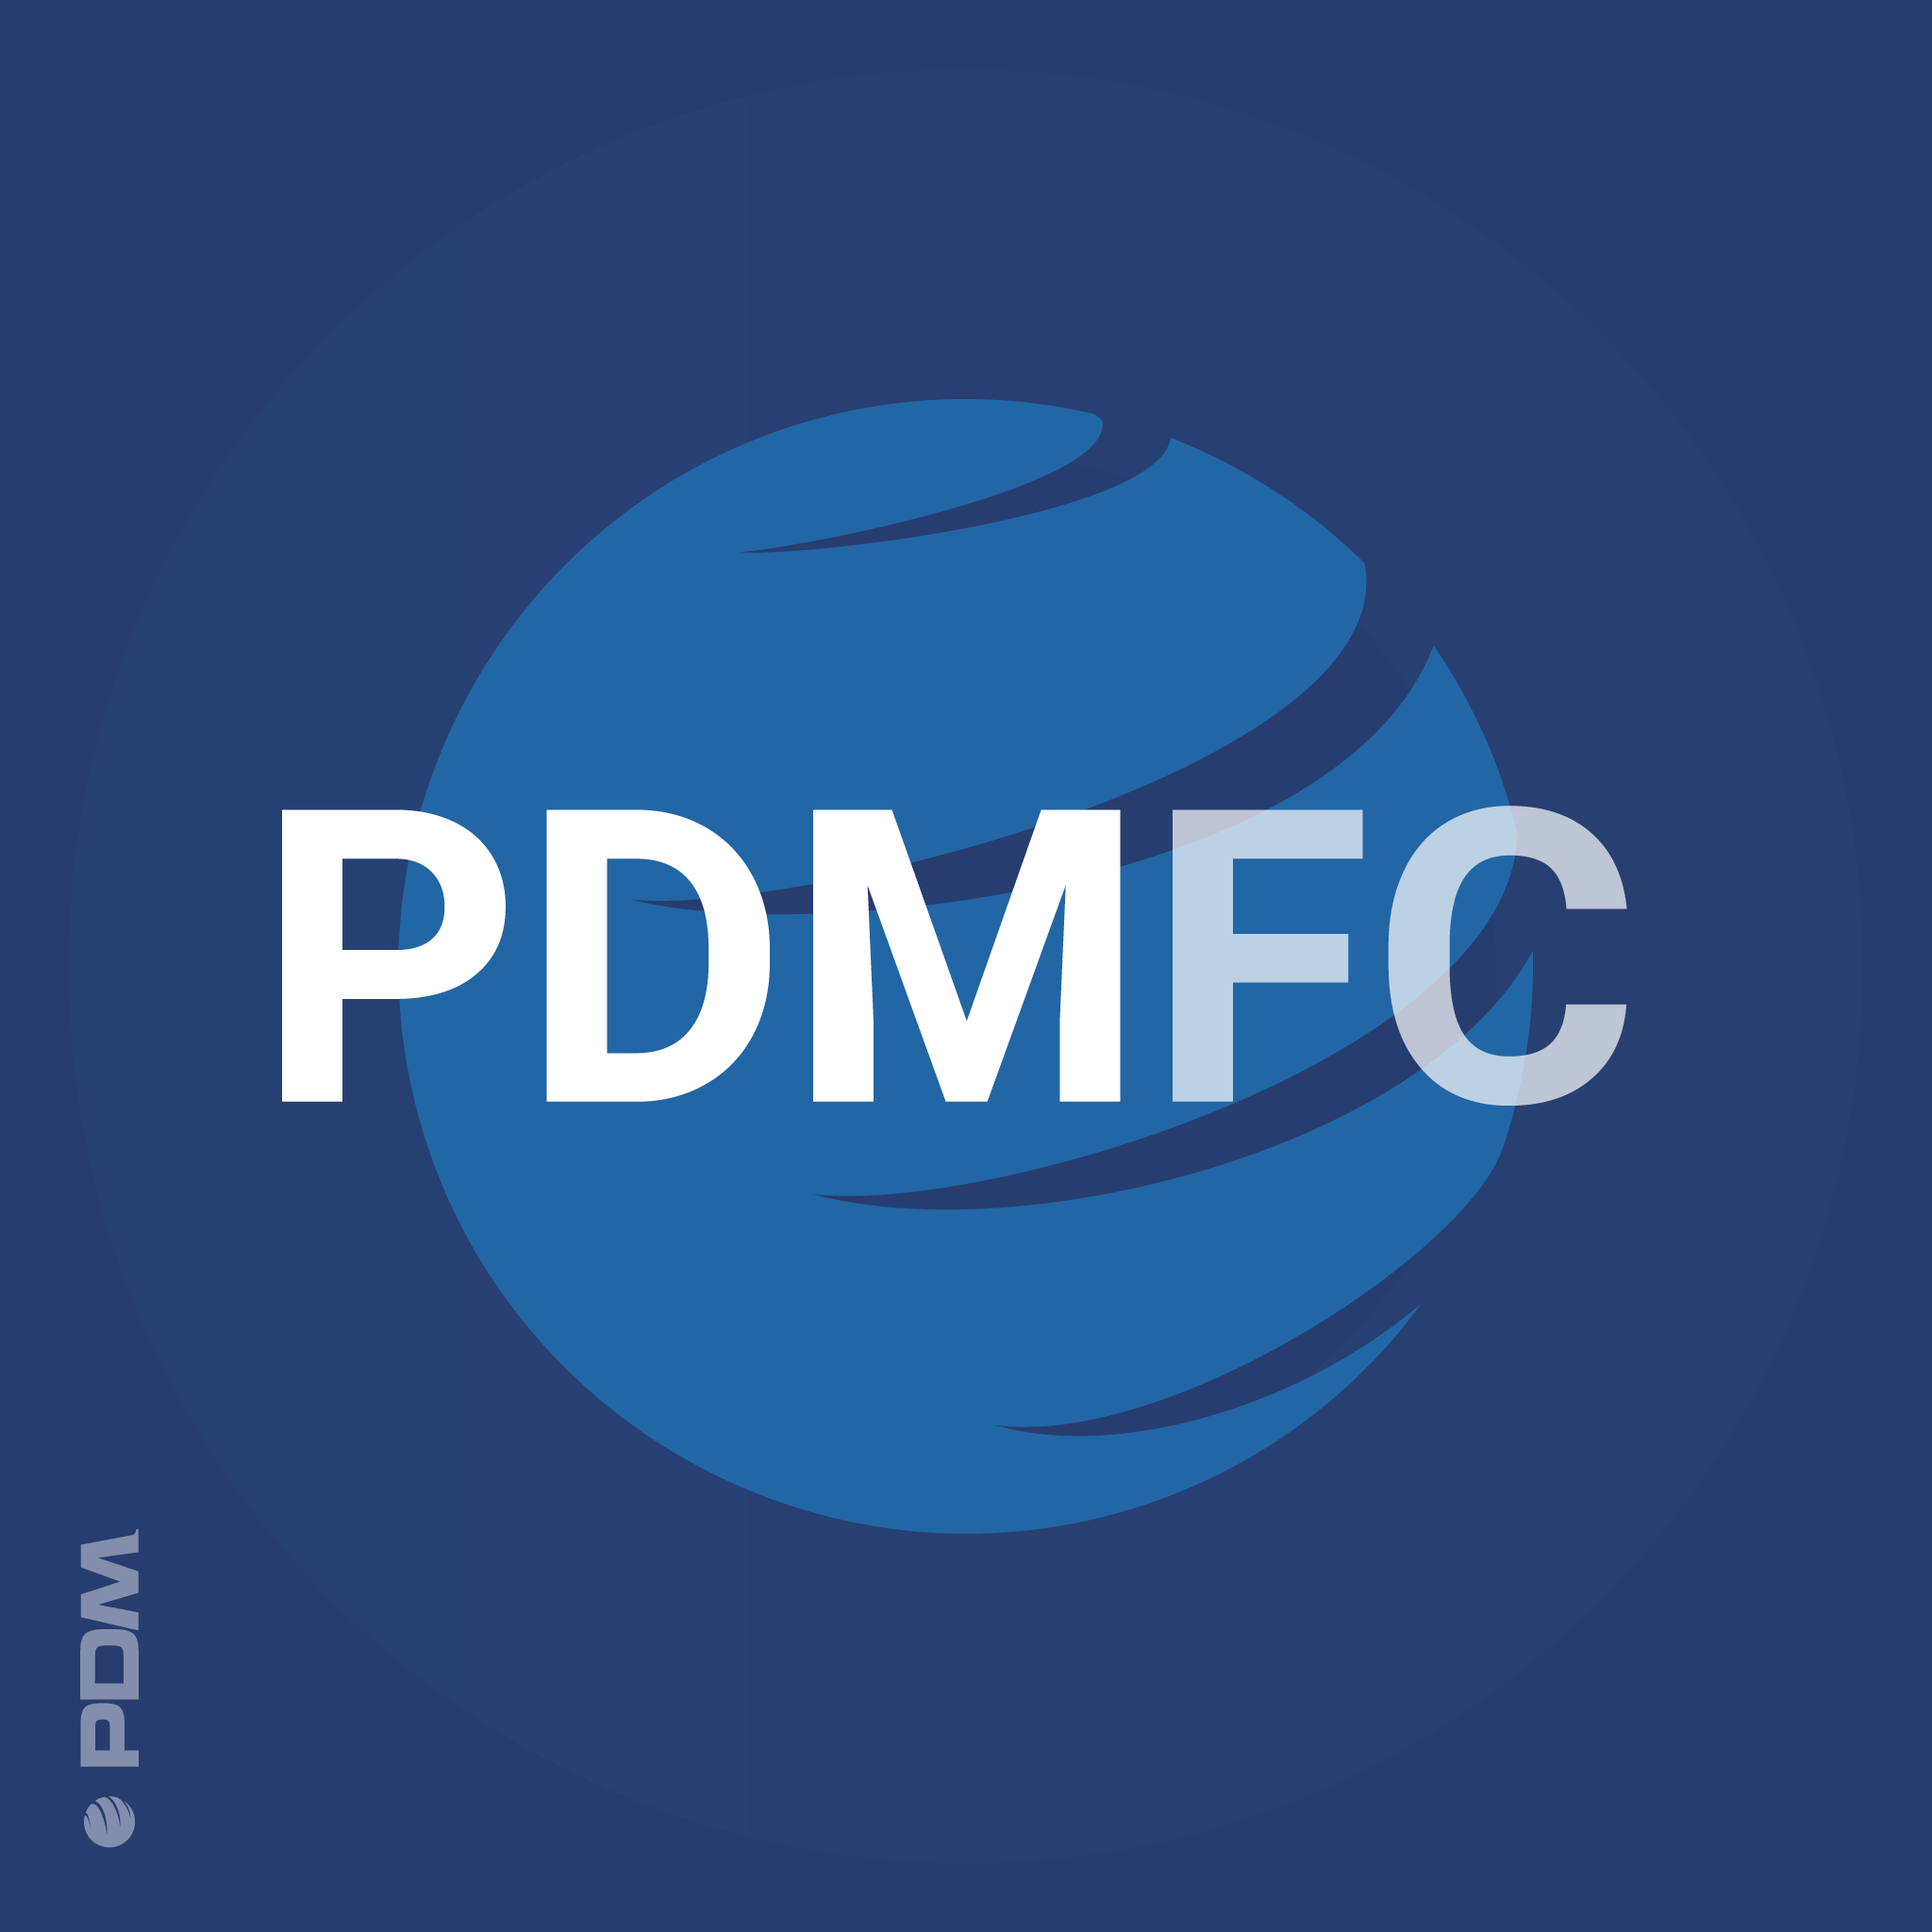 PDMFC logo